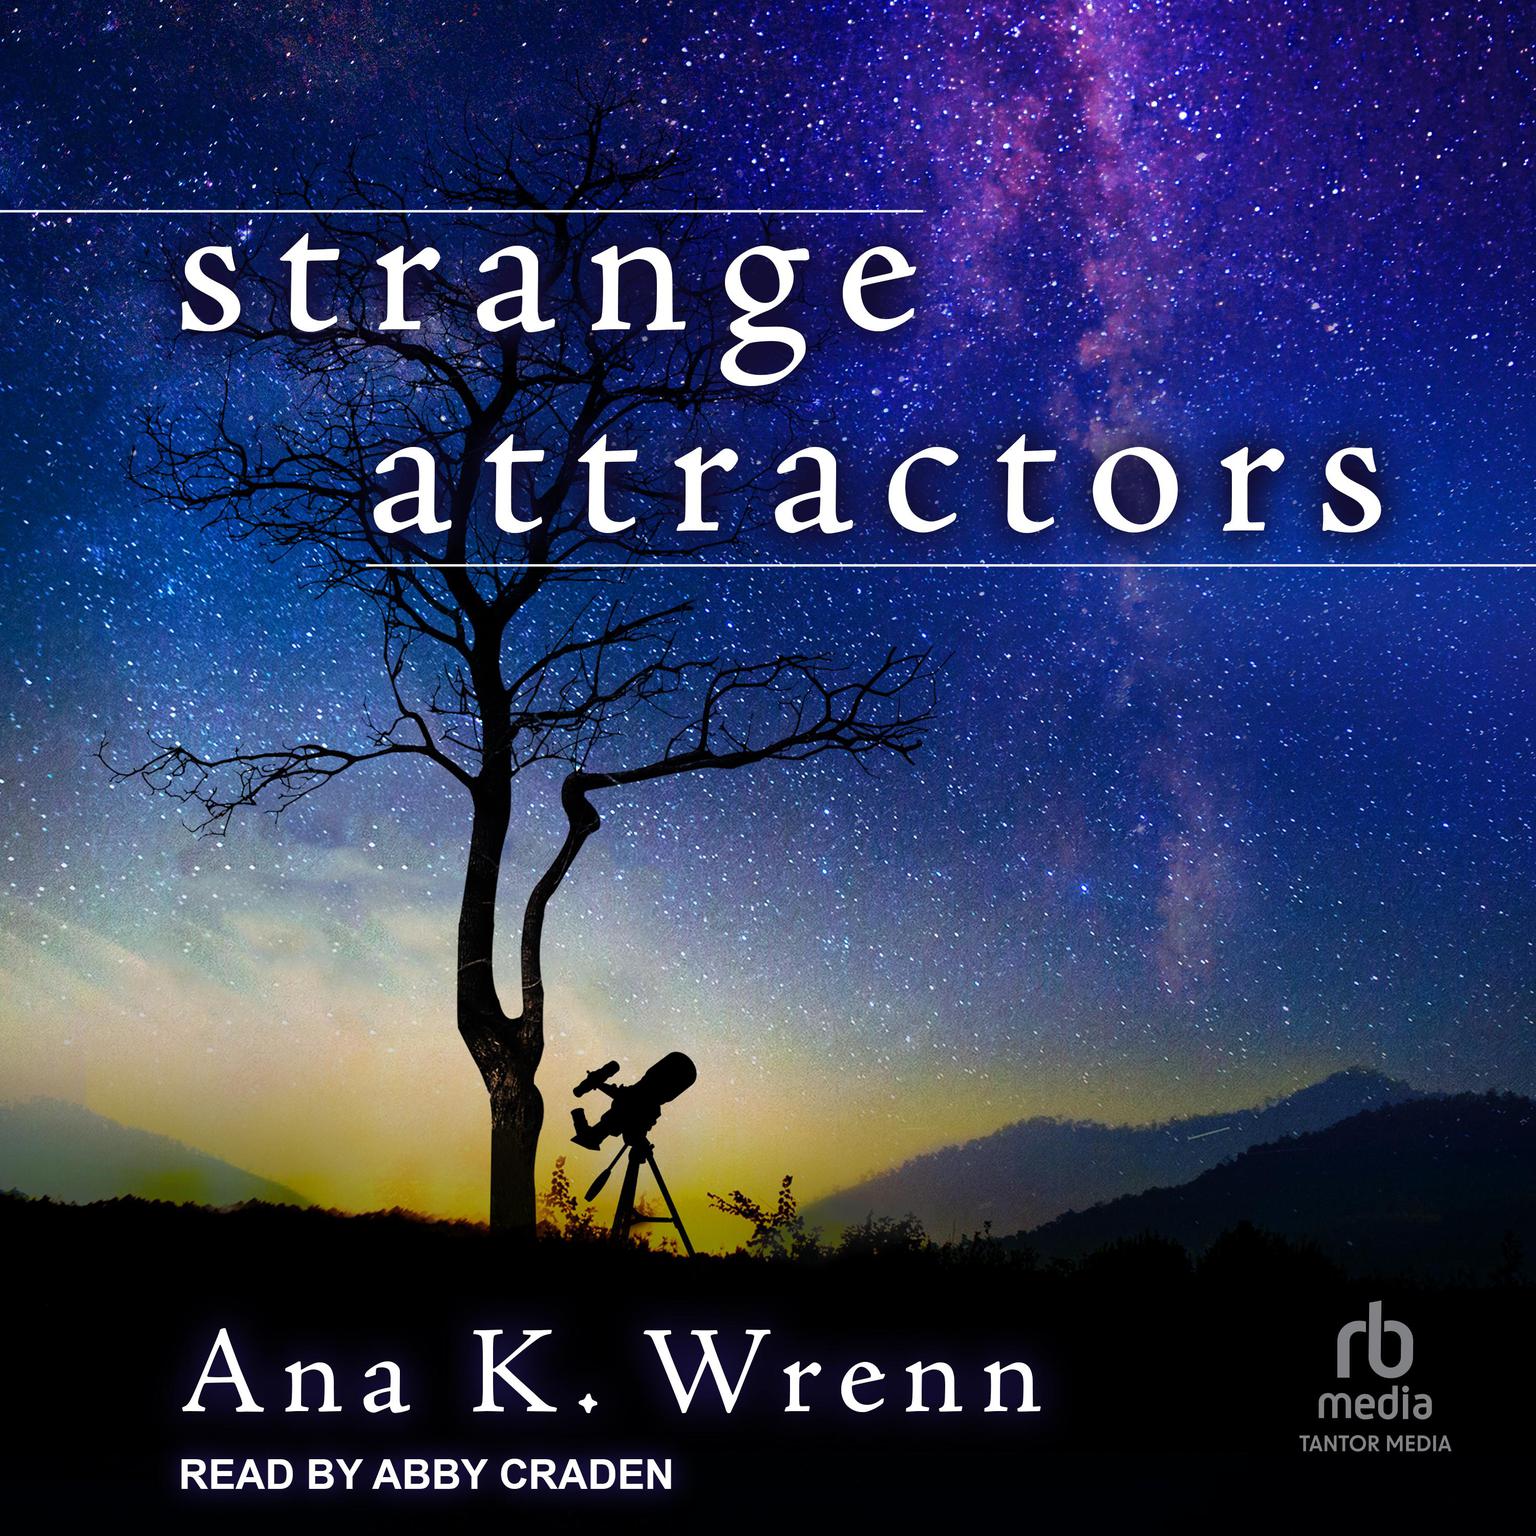 Ana K. Wrenn, Abby Craden: Strange Attractors (AudiobookFormat, Tantor Audio)